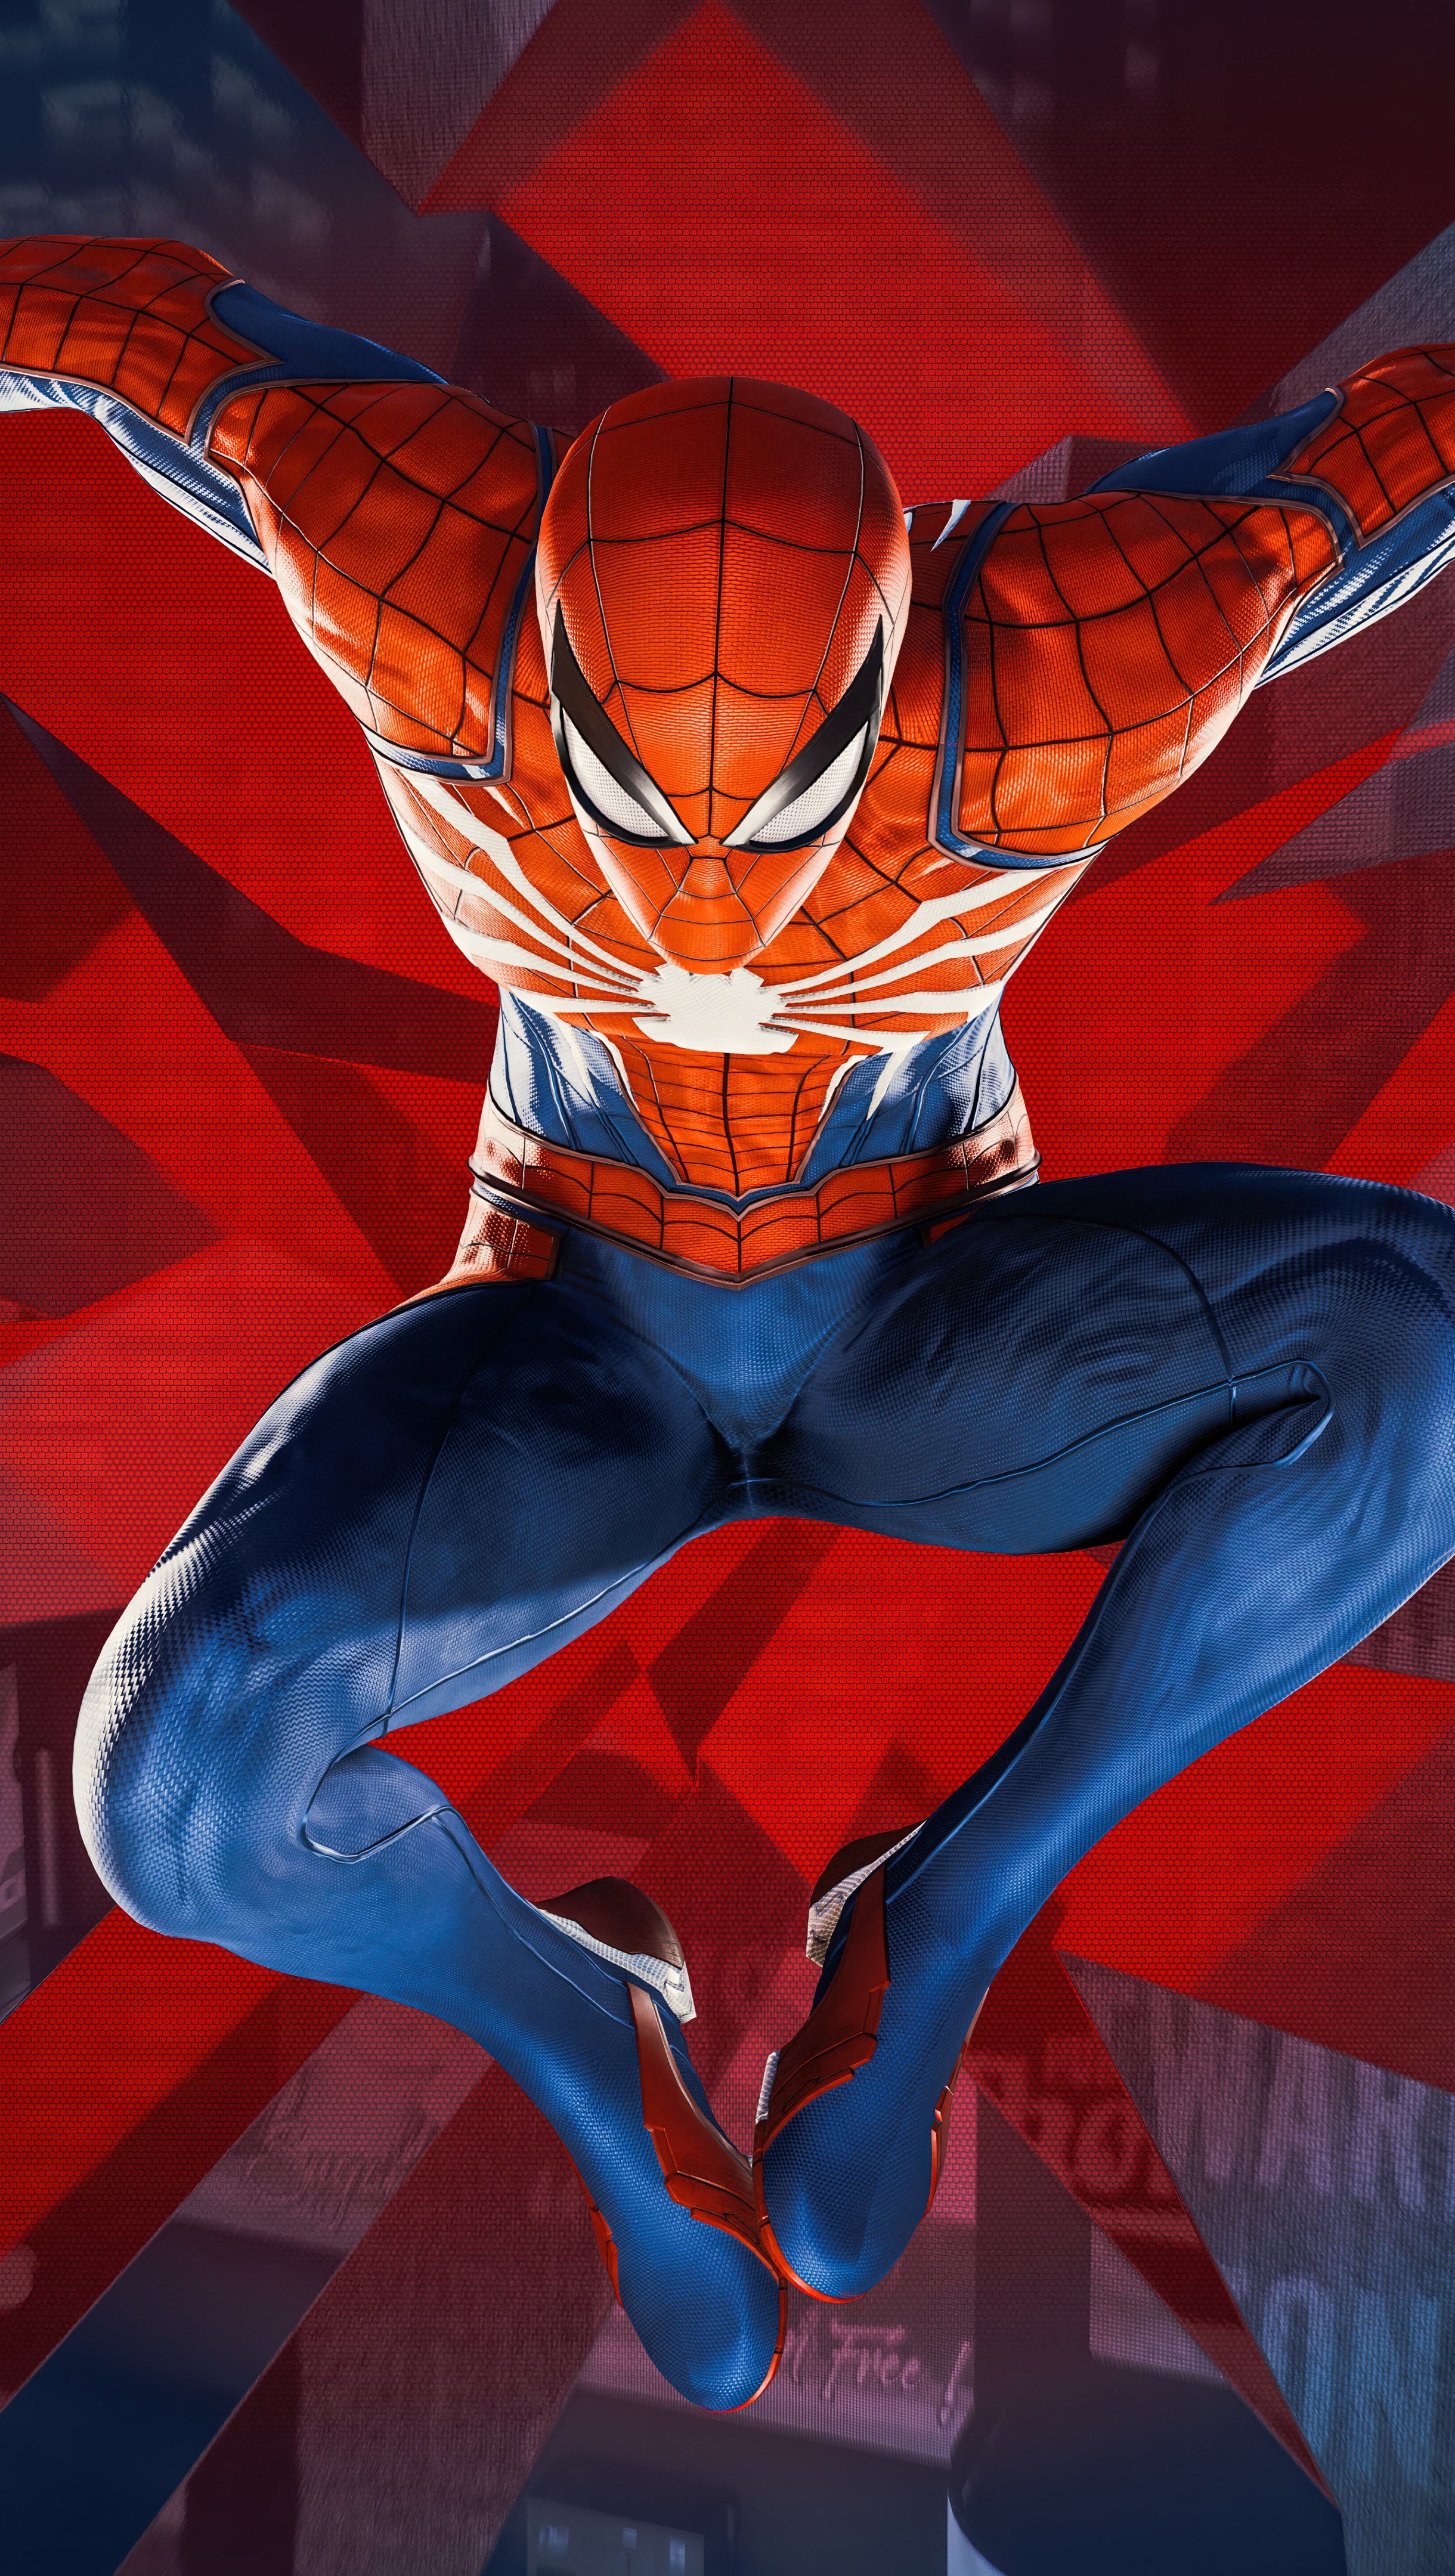 Spider Man PS5 Game Wallpaper 8k Ultra HD ID:11079